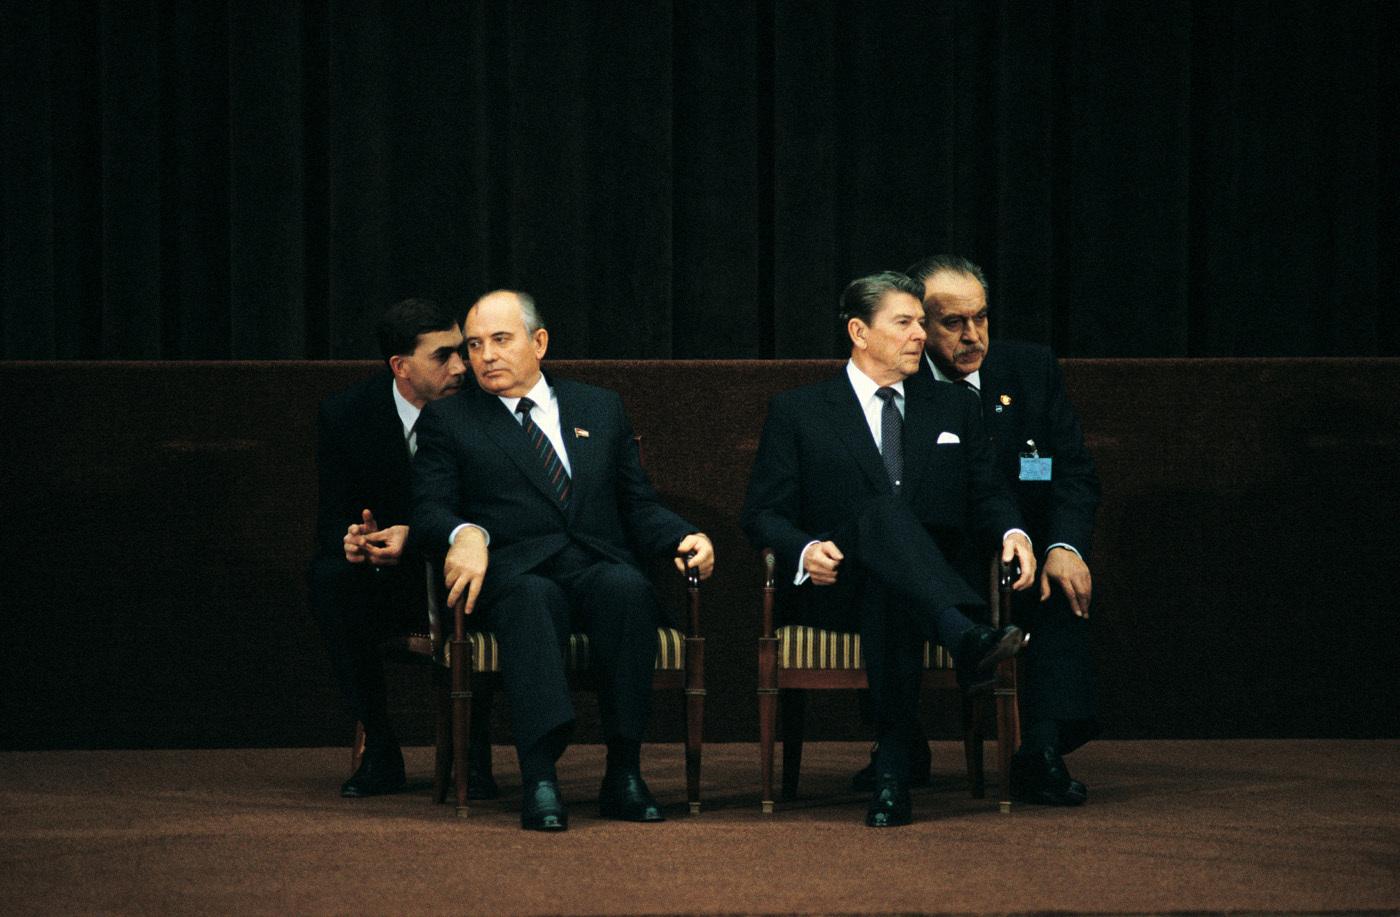 Reagan & Gorbachev, the first Summit